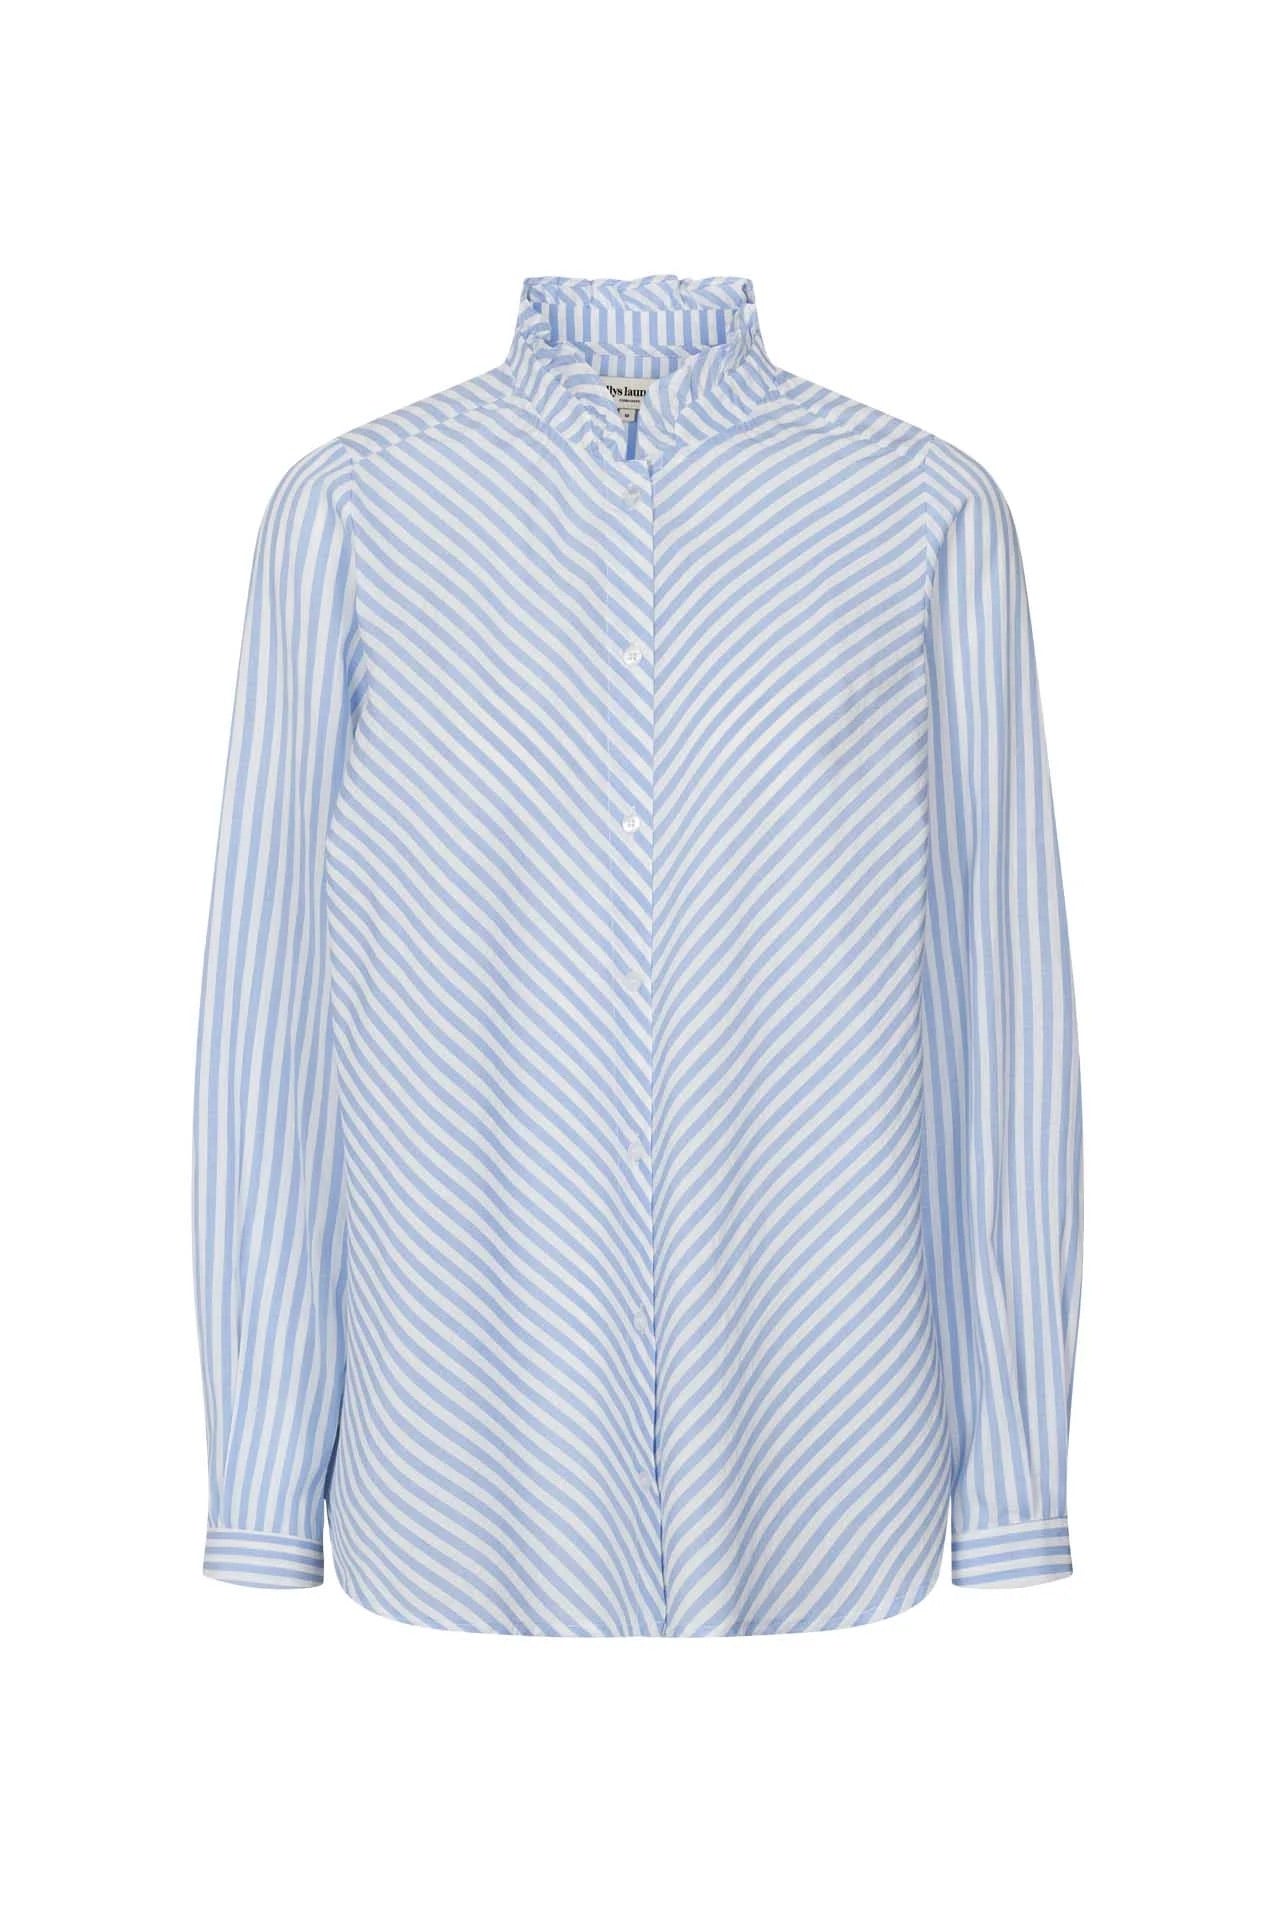 Hobart Shirt - Stripe